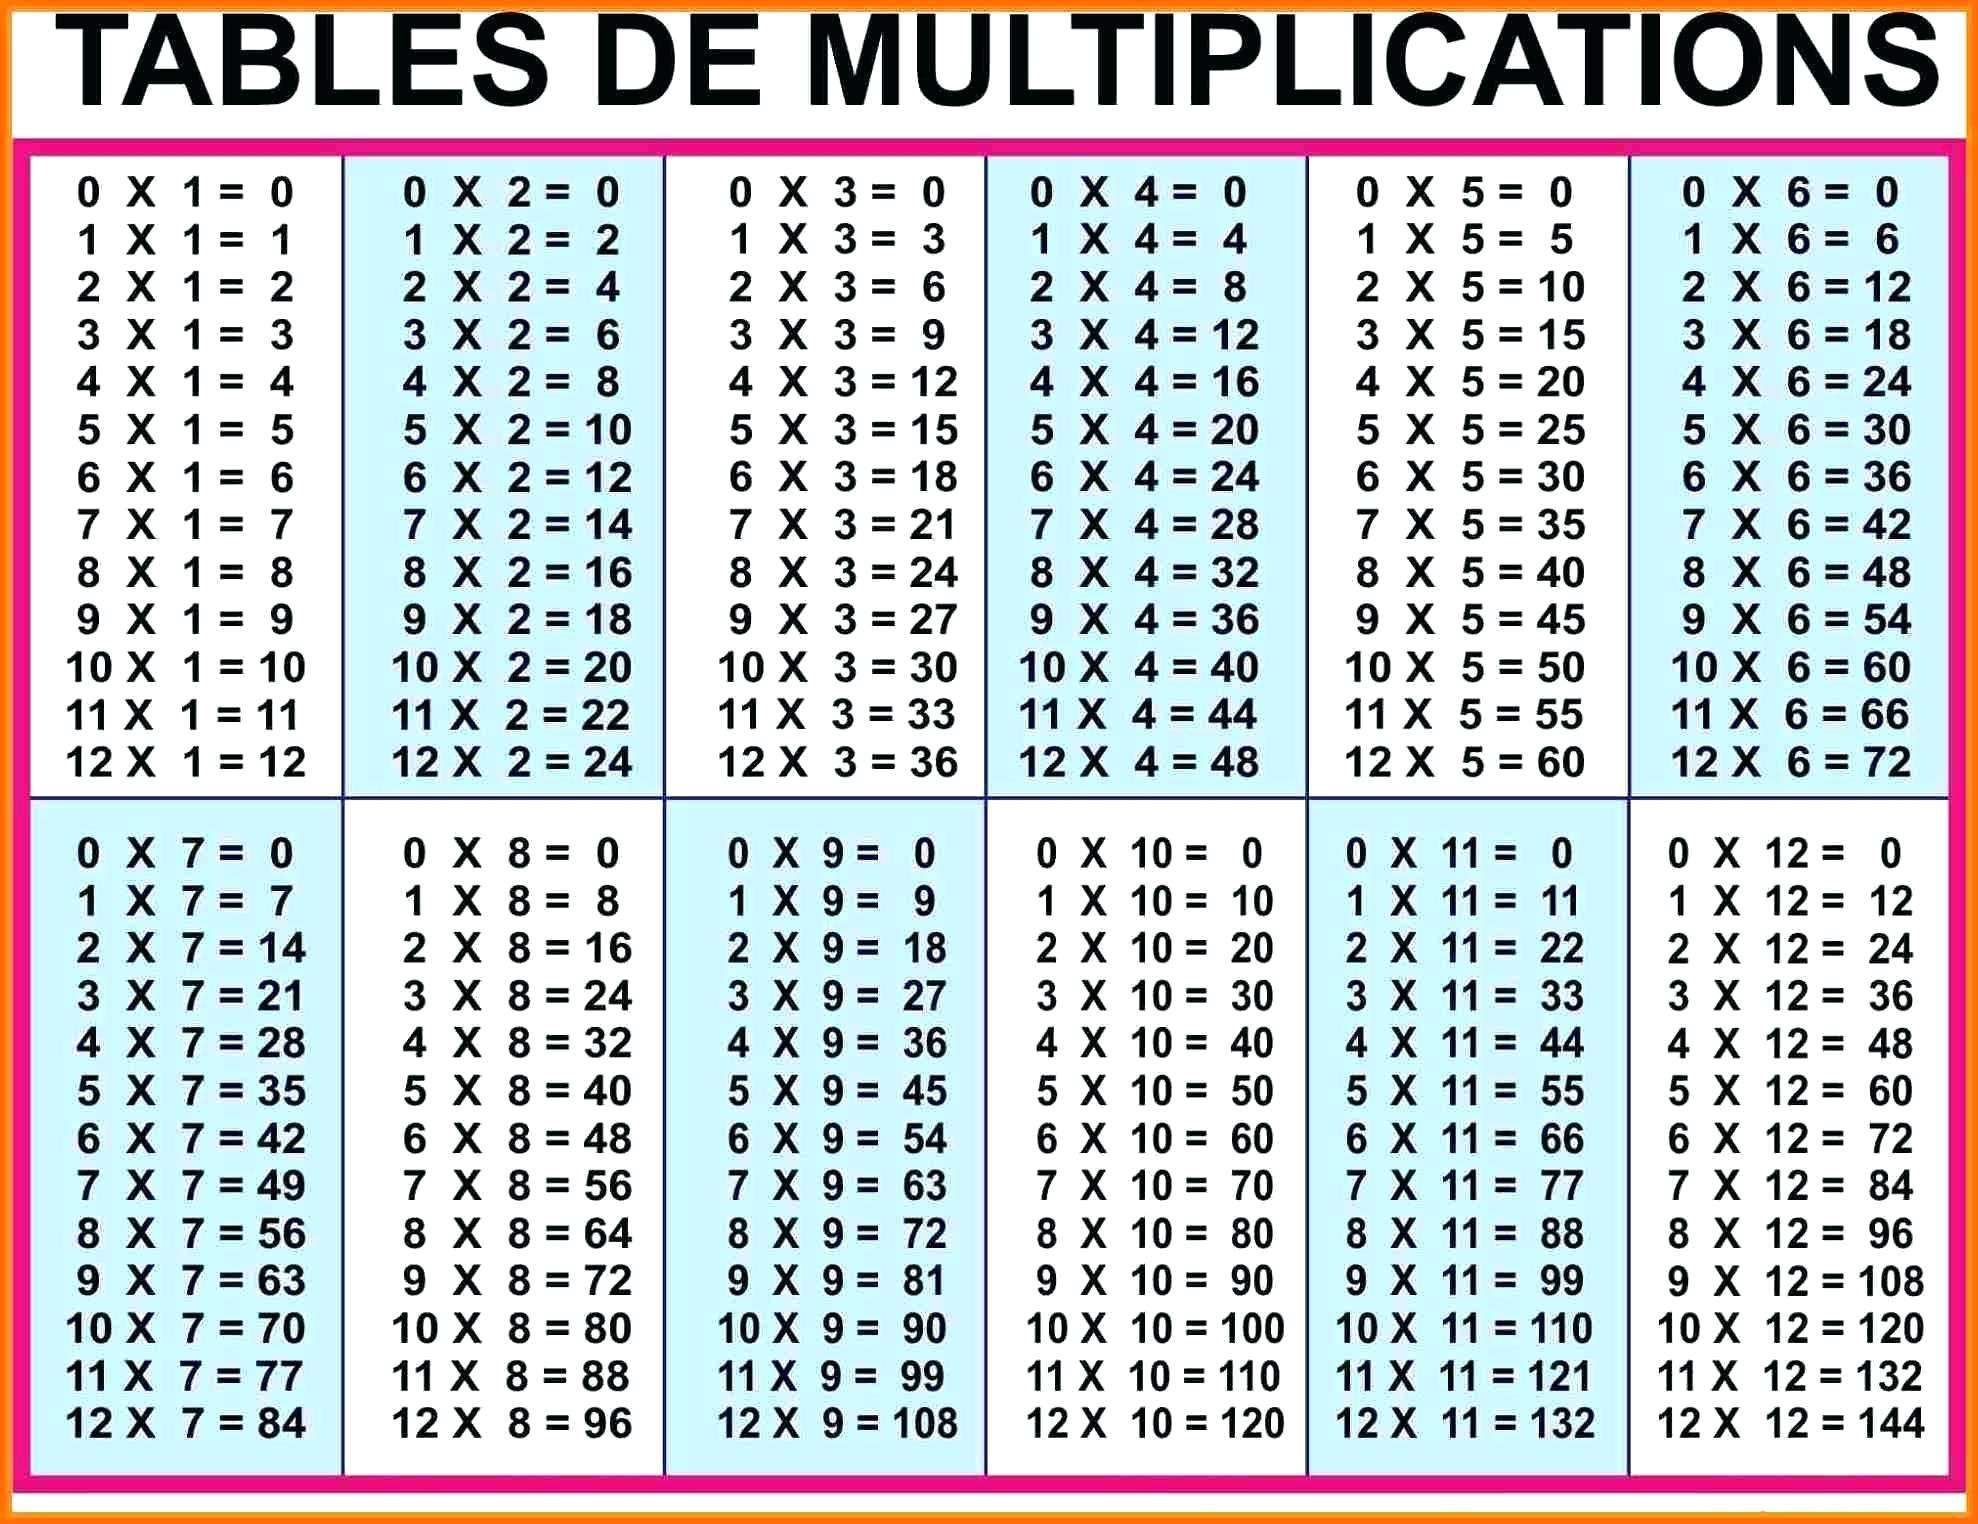 Multiplication Table Worksheets 1 12 | Printable Worksheets pertaining to Printable Multiplication Quiz 0-12